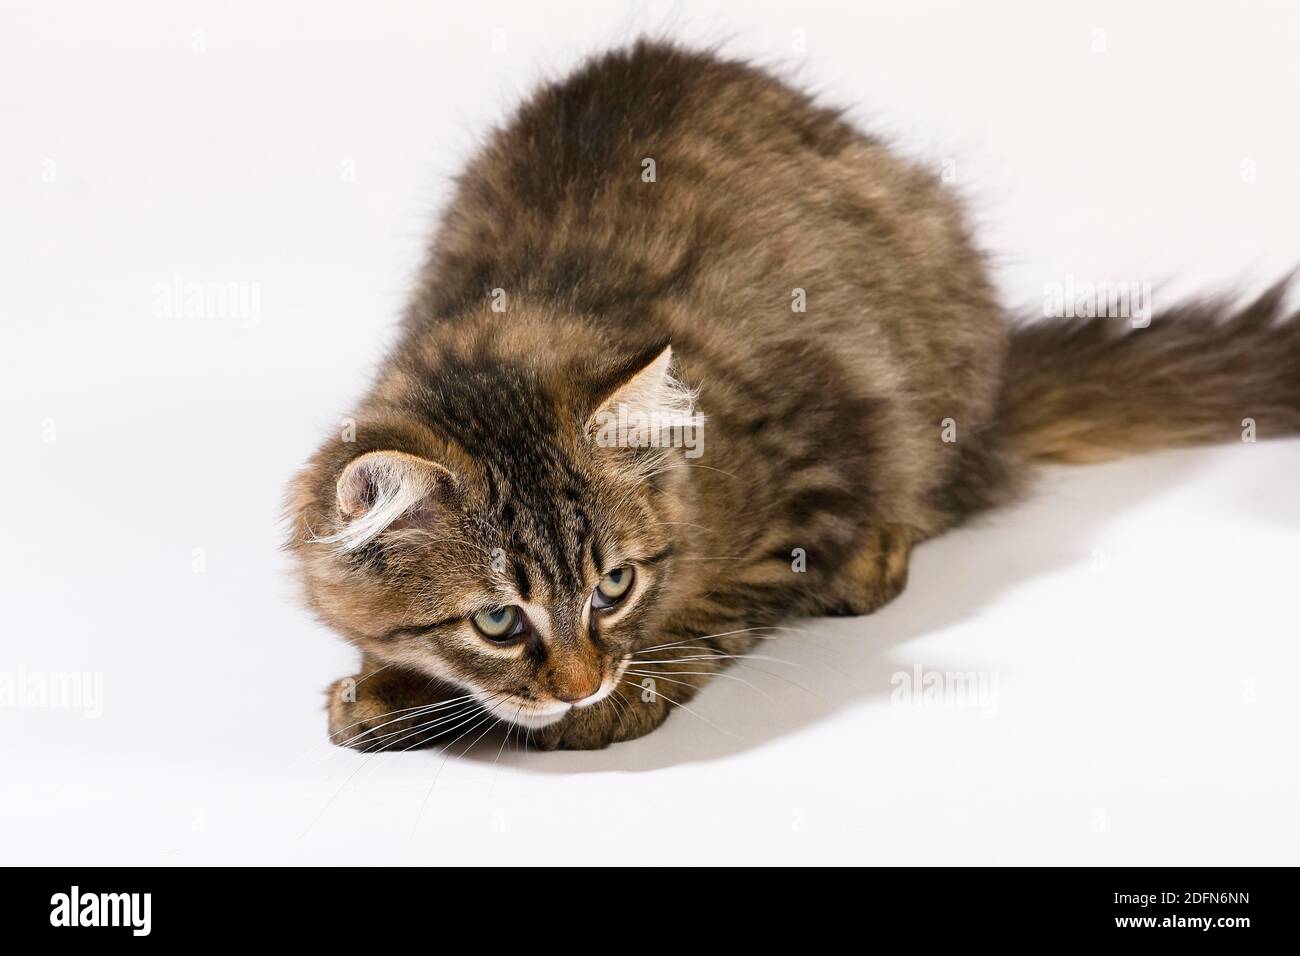 Junge Katze sieht neugierig aus, Hauskatze (Felis silvestris catus), Tierkind, Studioaufnahme, Deutschland Stockfoto